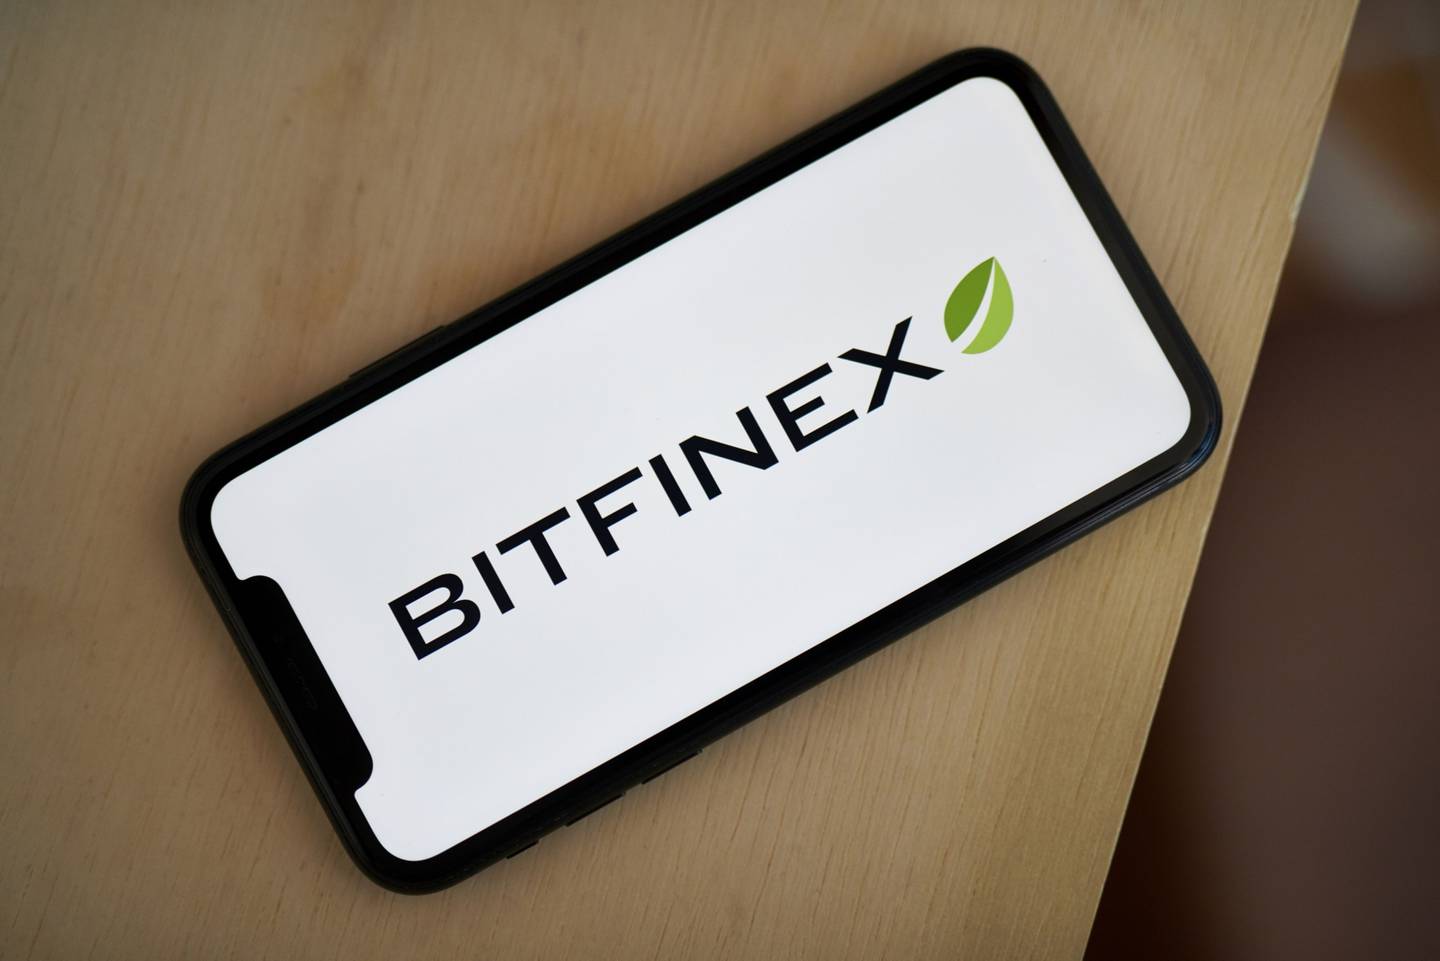 The Bitfinex Logo on a Smartphone.